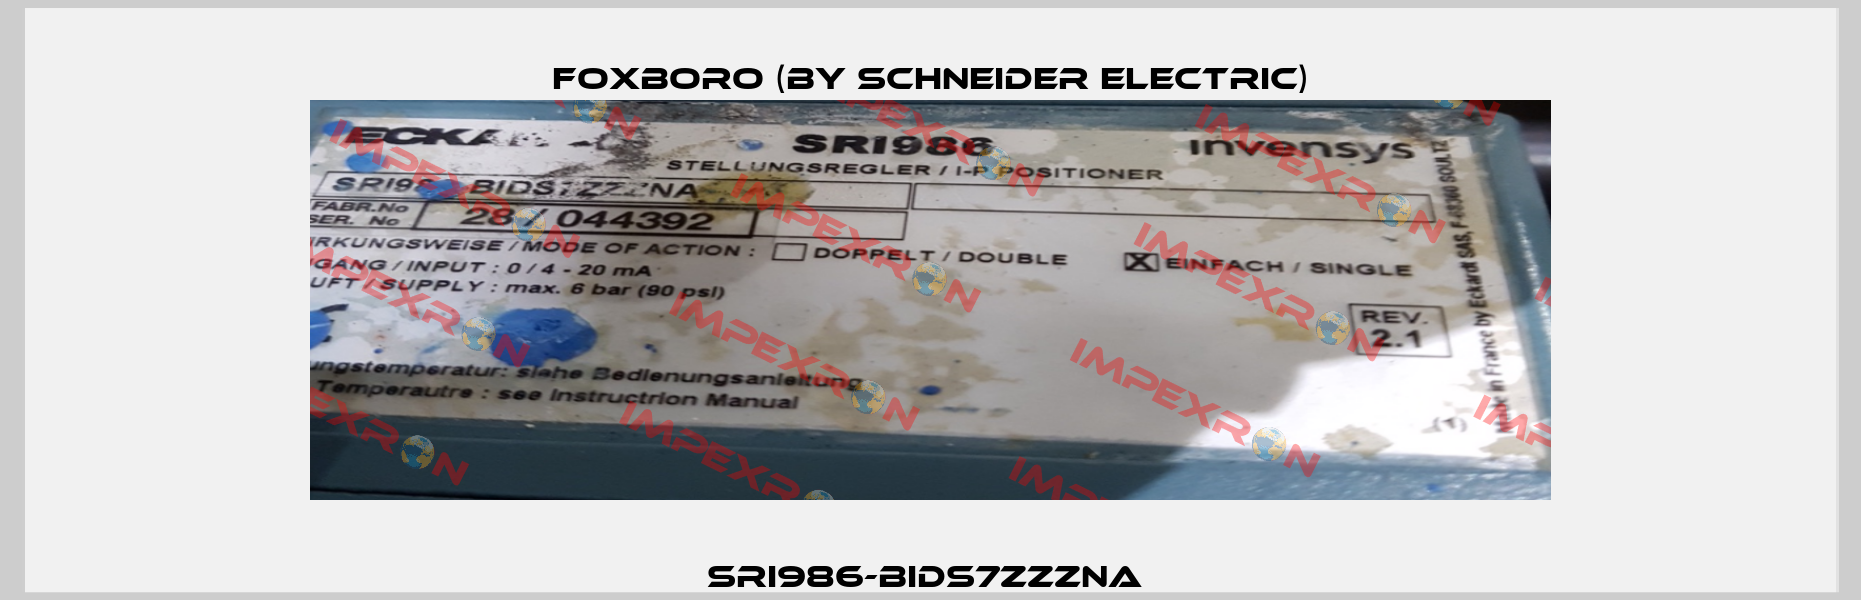 SRI986-BIDS7ZZZNA  Foxboro (by Schneider Electric)